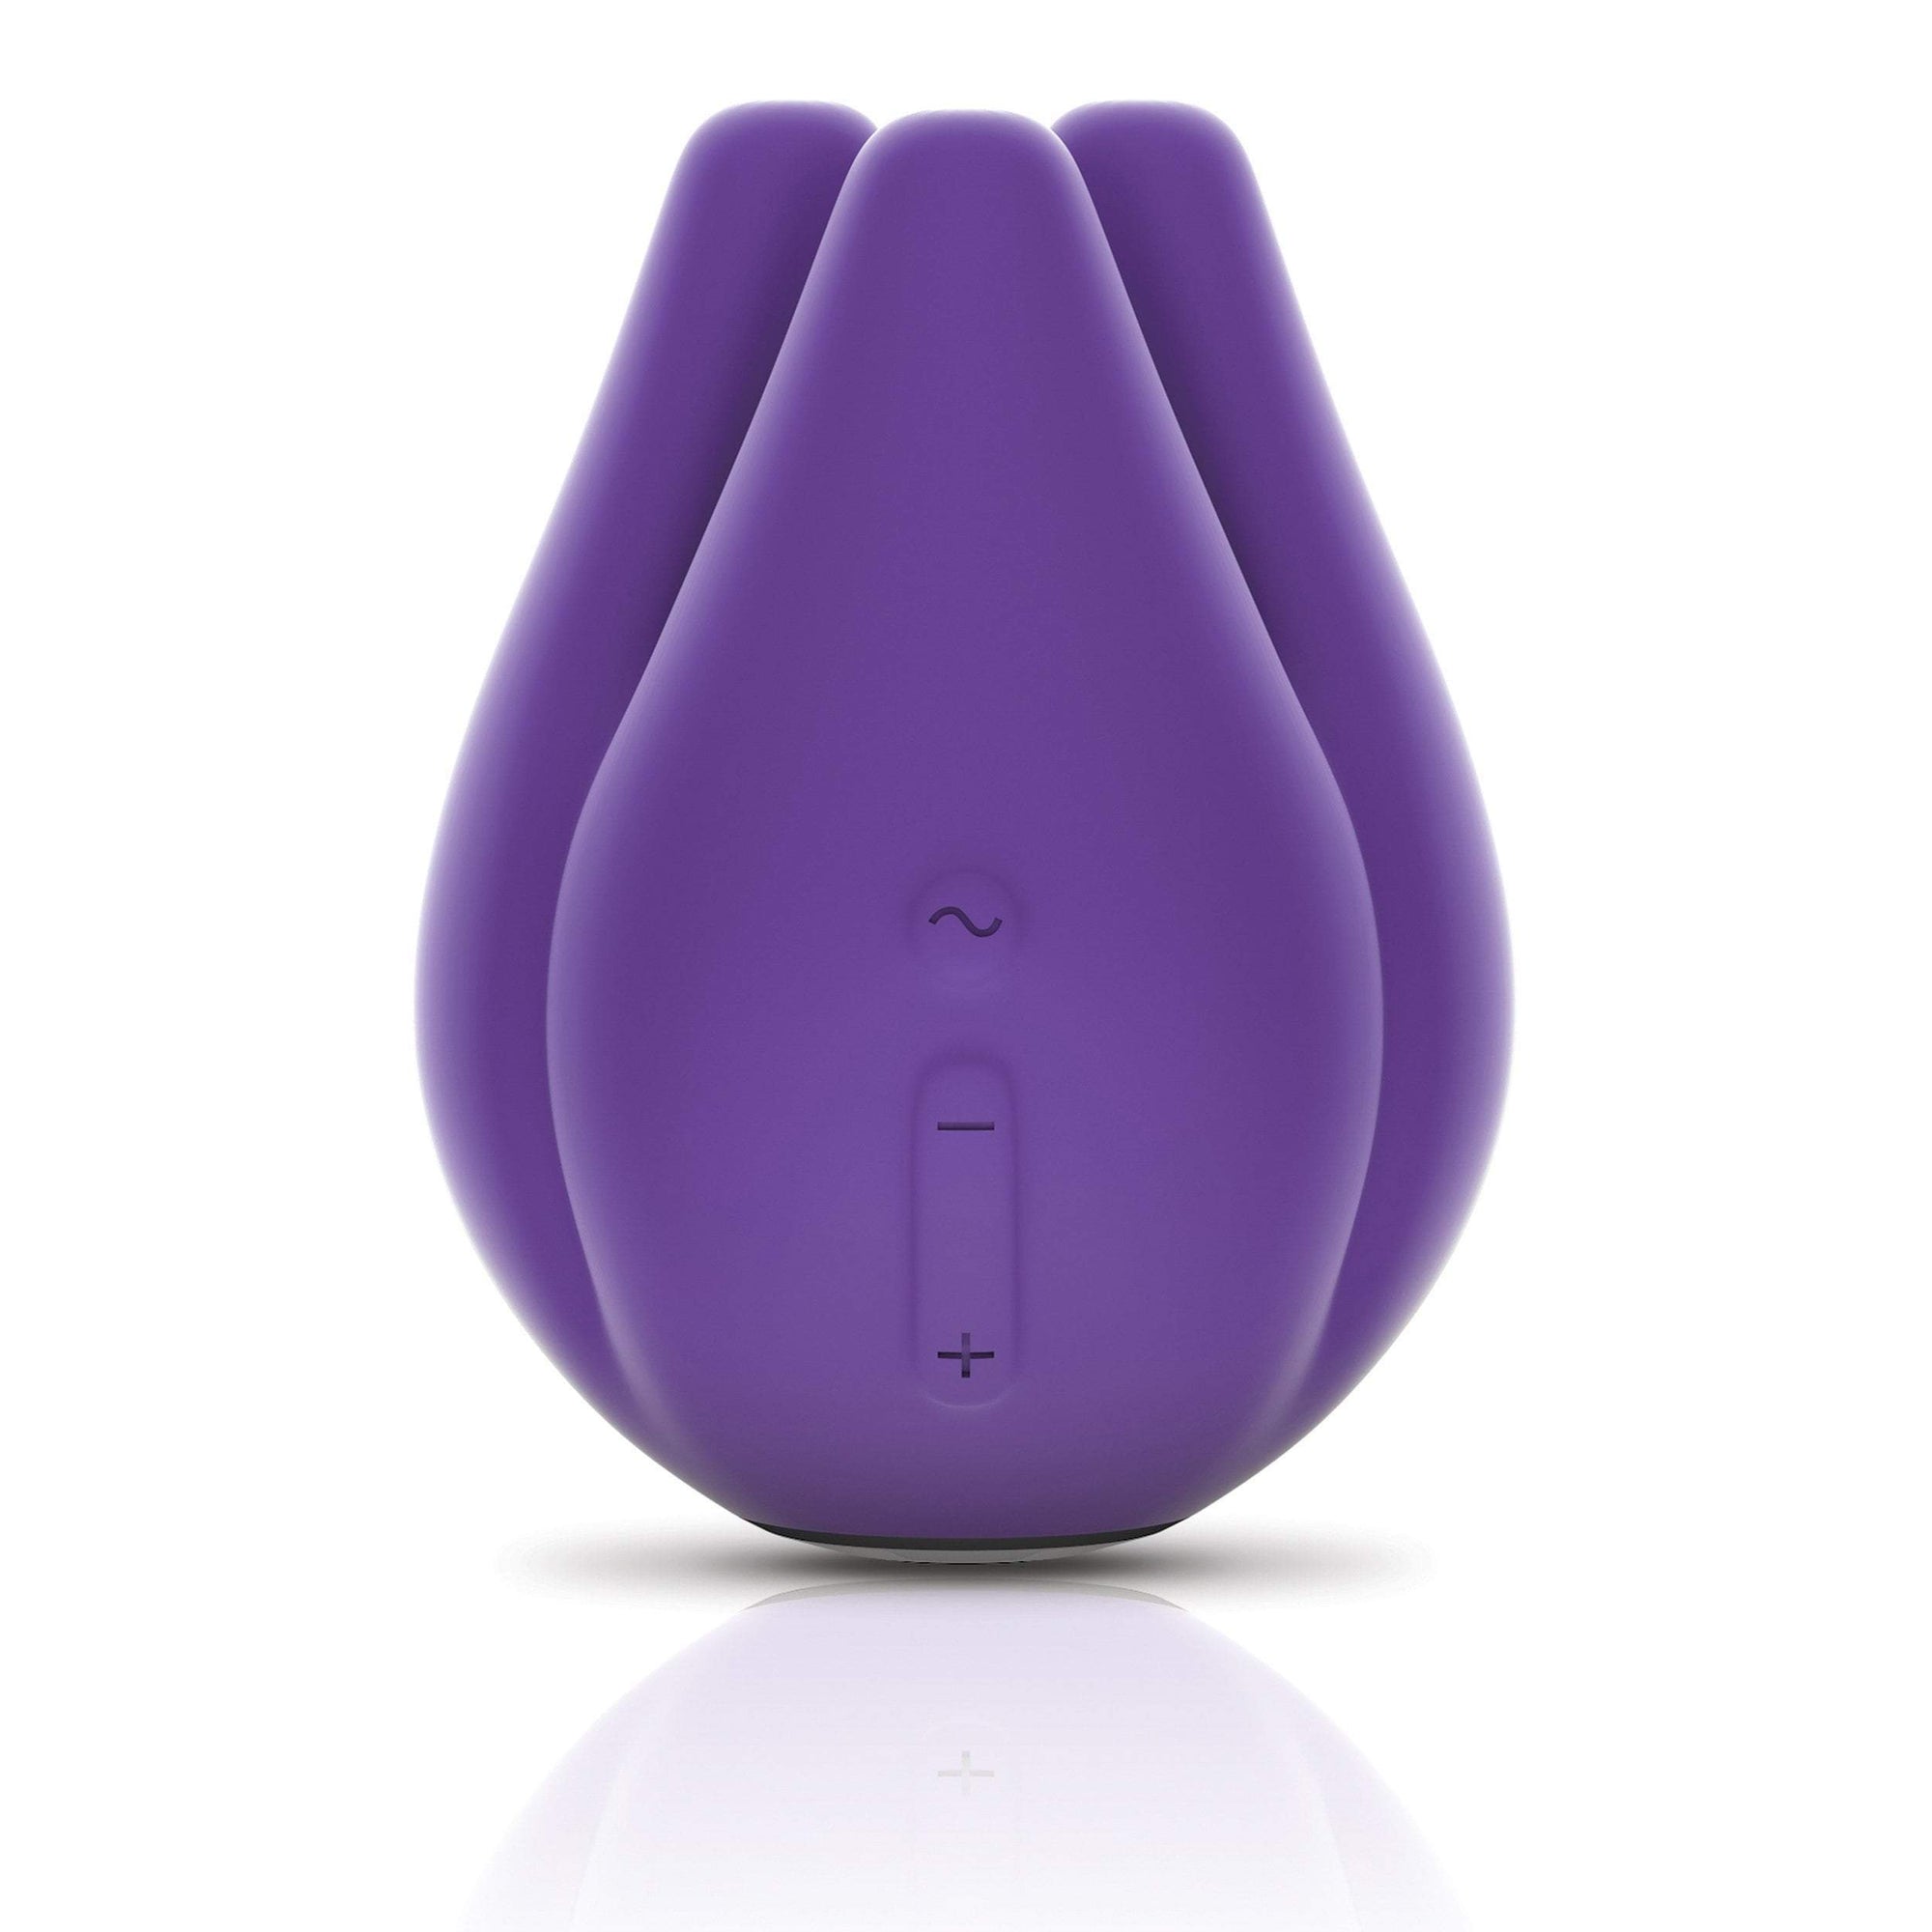 JimmyJane - Pure UV Sanitizing Mood Light Love Pods Tre Ultraviolet Edition (Purple) -  Clit Massager (Vibration) Rechargeable  Durio.sg